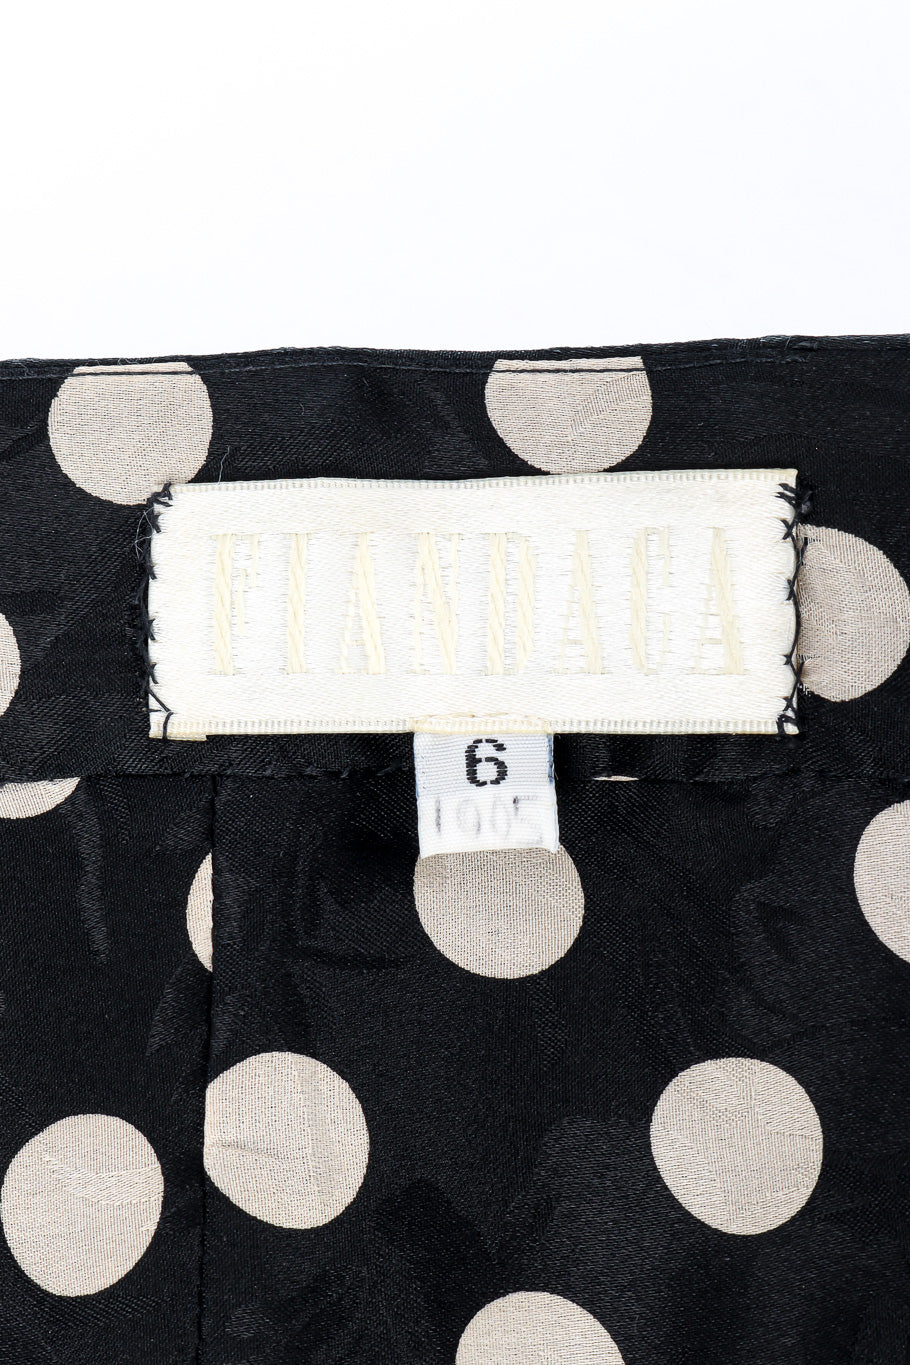 Dress and jacket by Fiandaca flat lay label  @recessla